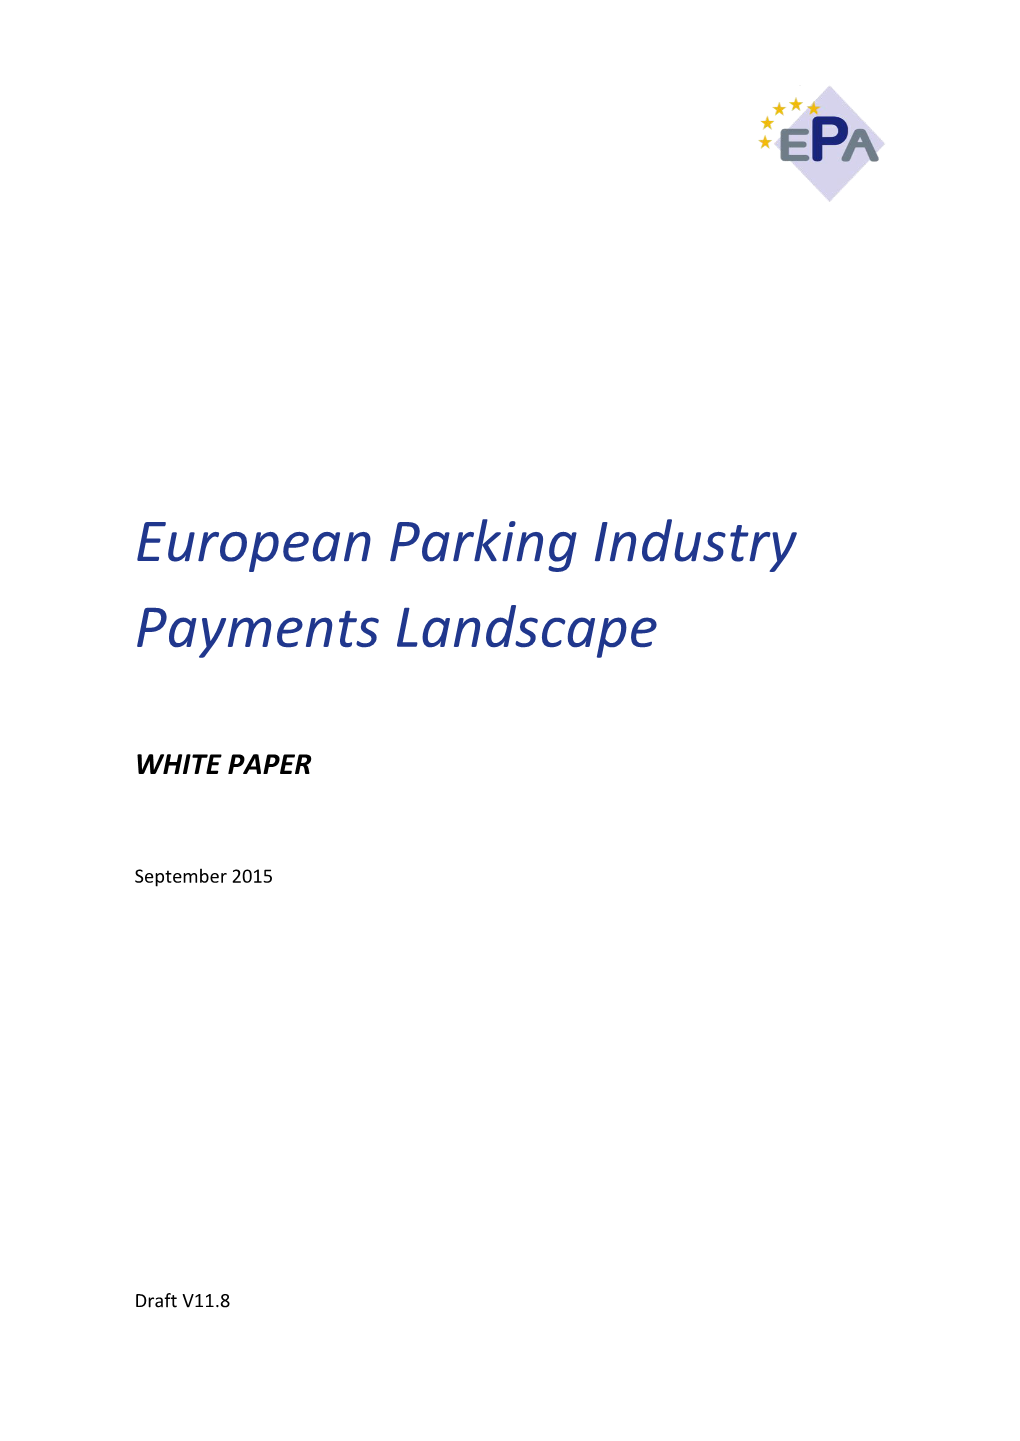 European Parking Industry Payments Landscape